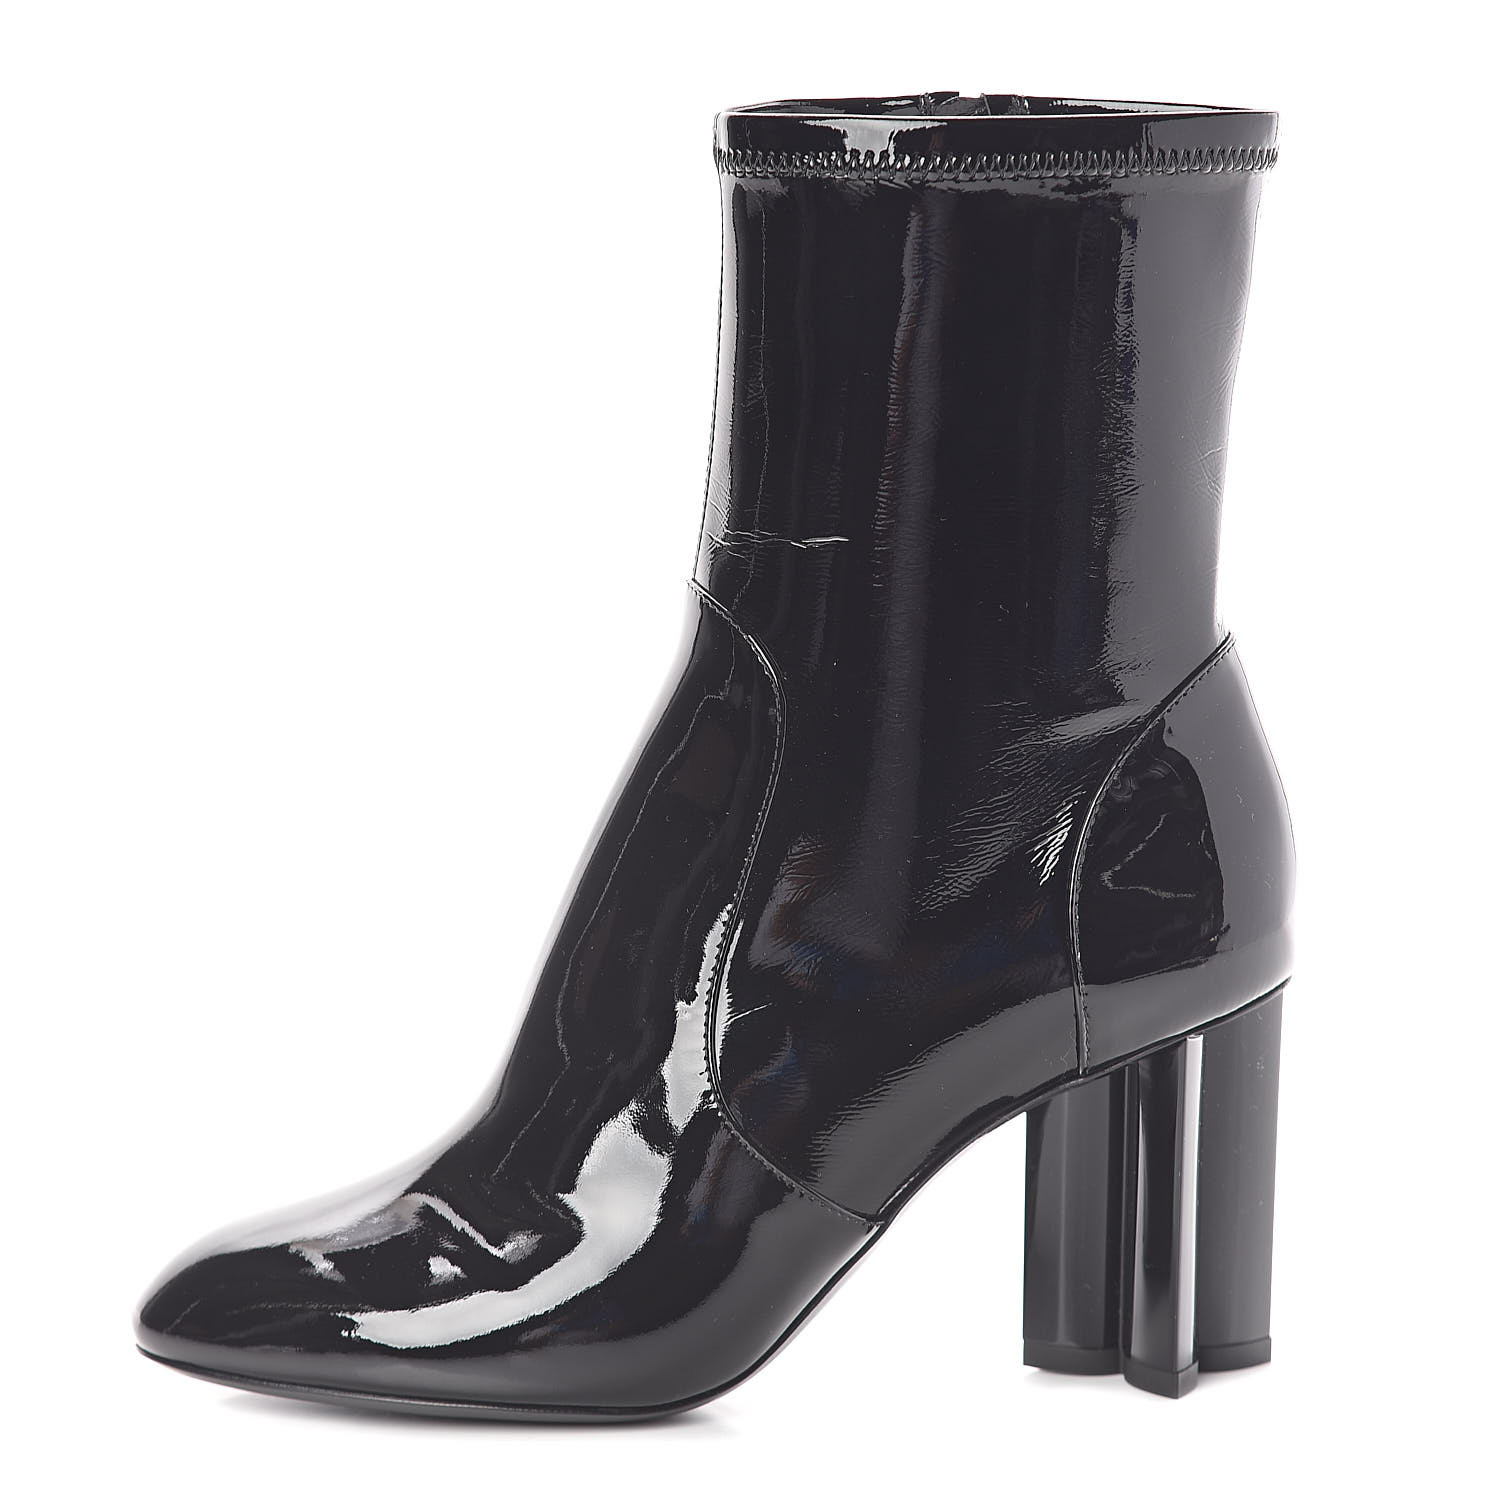 LOUIS VUITTON Patent Silhouette Ankle Boots 36.5 Black 504784